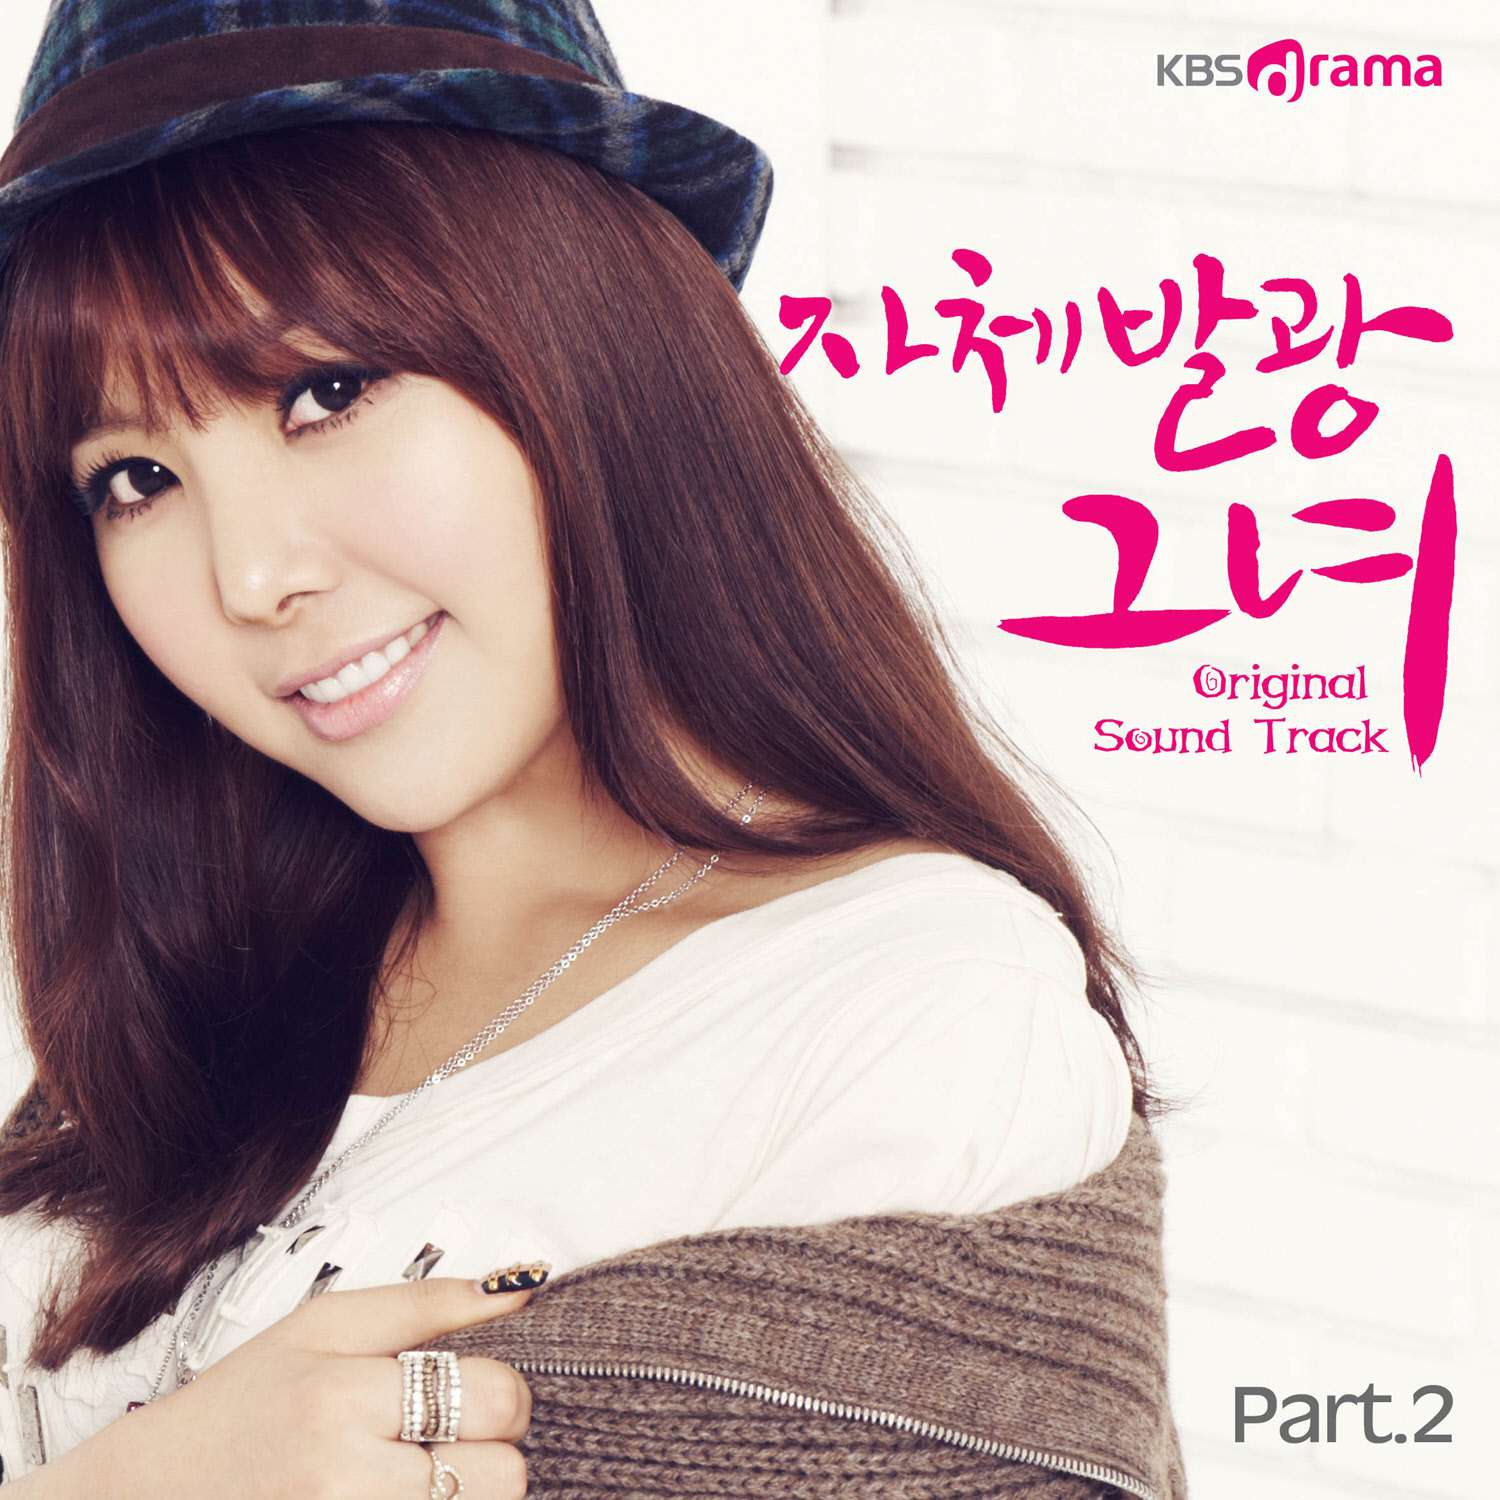 [Single] Raina (After School) & K2 - Sunshine Girl OST Part 2